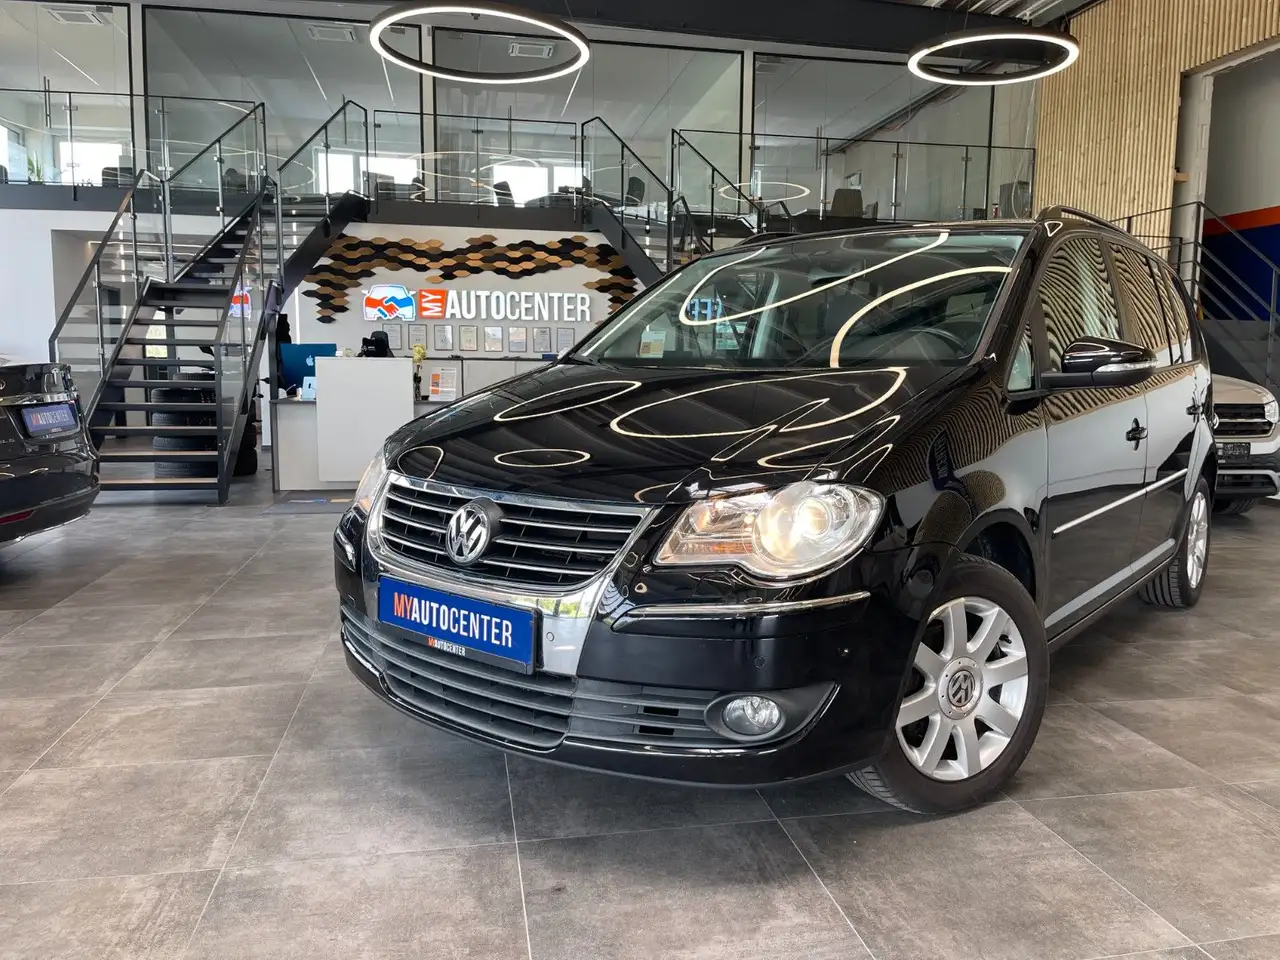 Volkswagen Touran Monovolume in Zwart tweedehands in Pfaffenhofen an der Ilm voor € 7.499,-